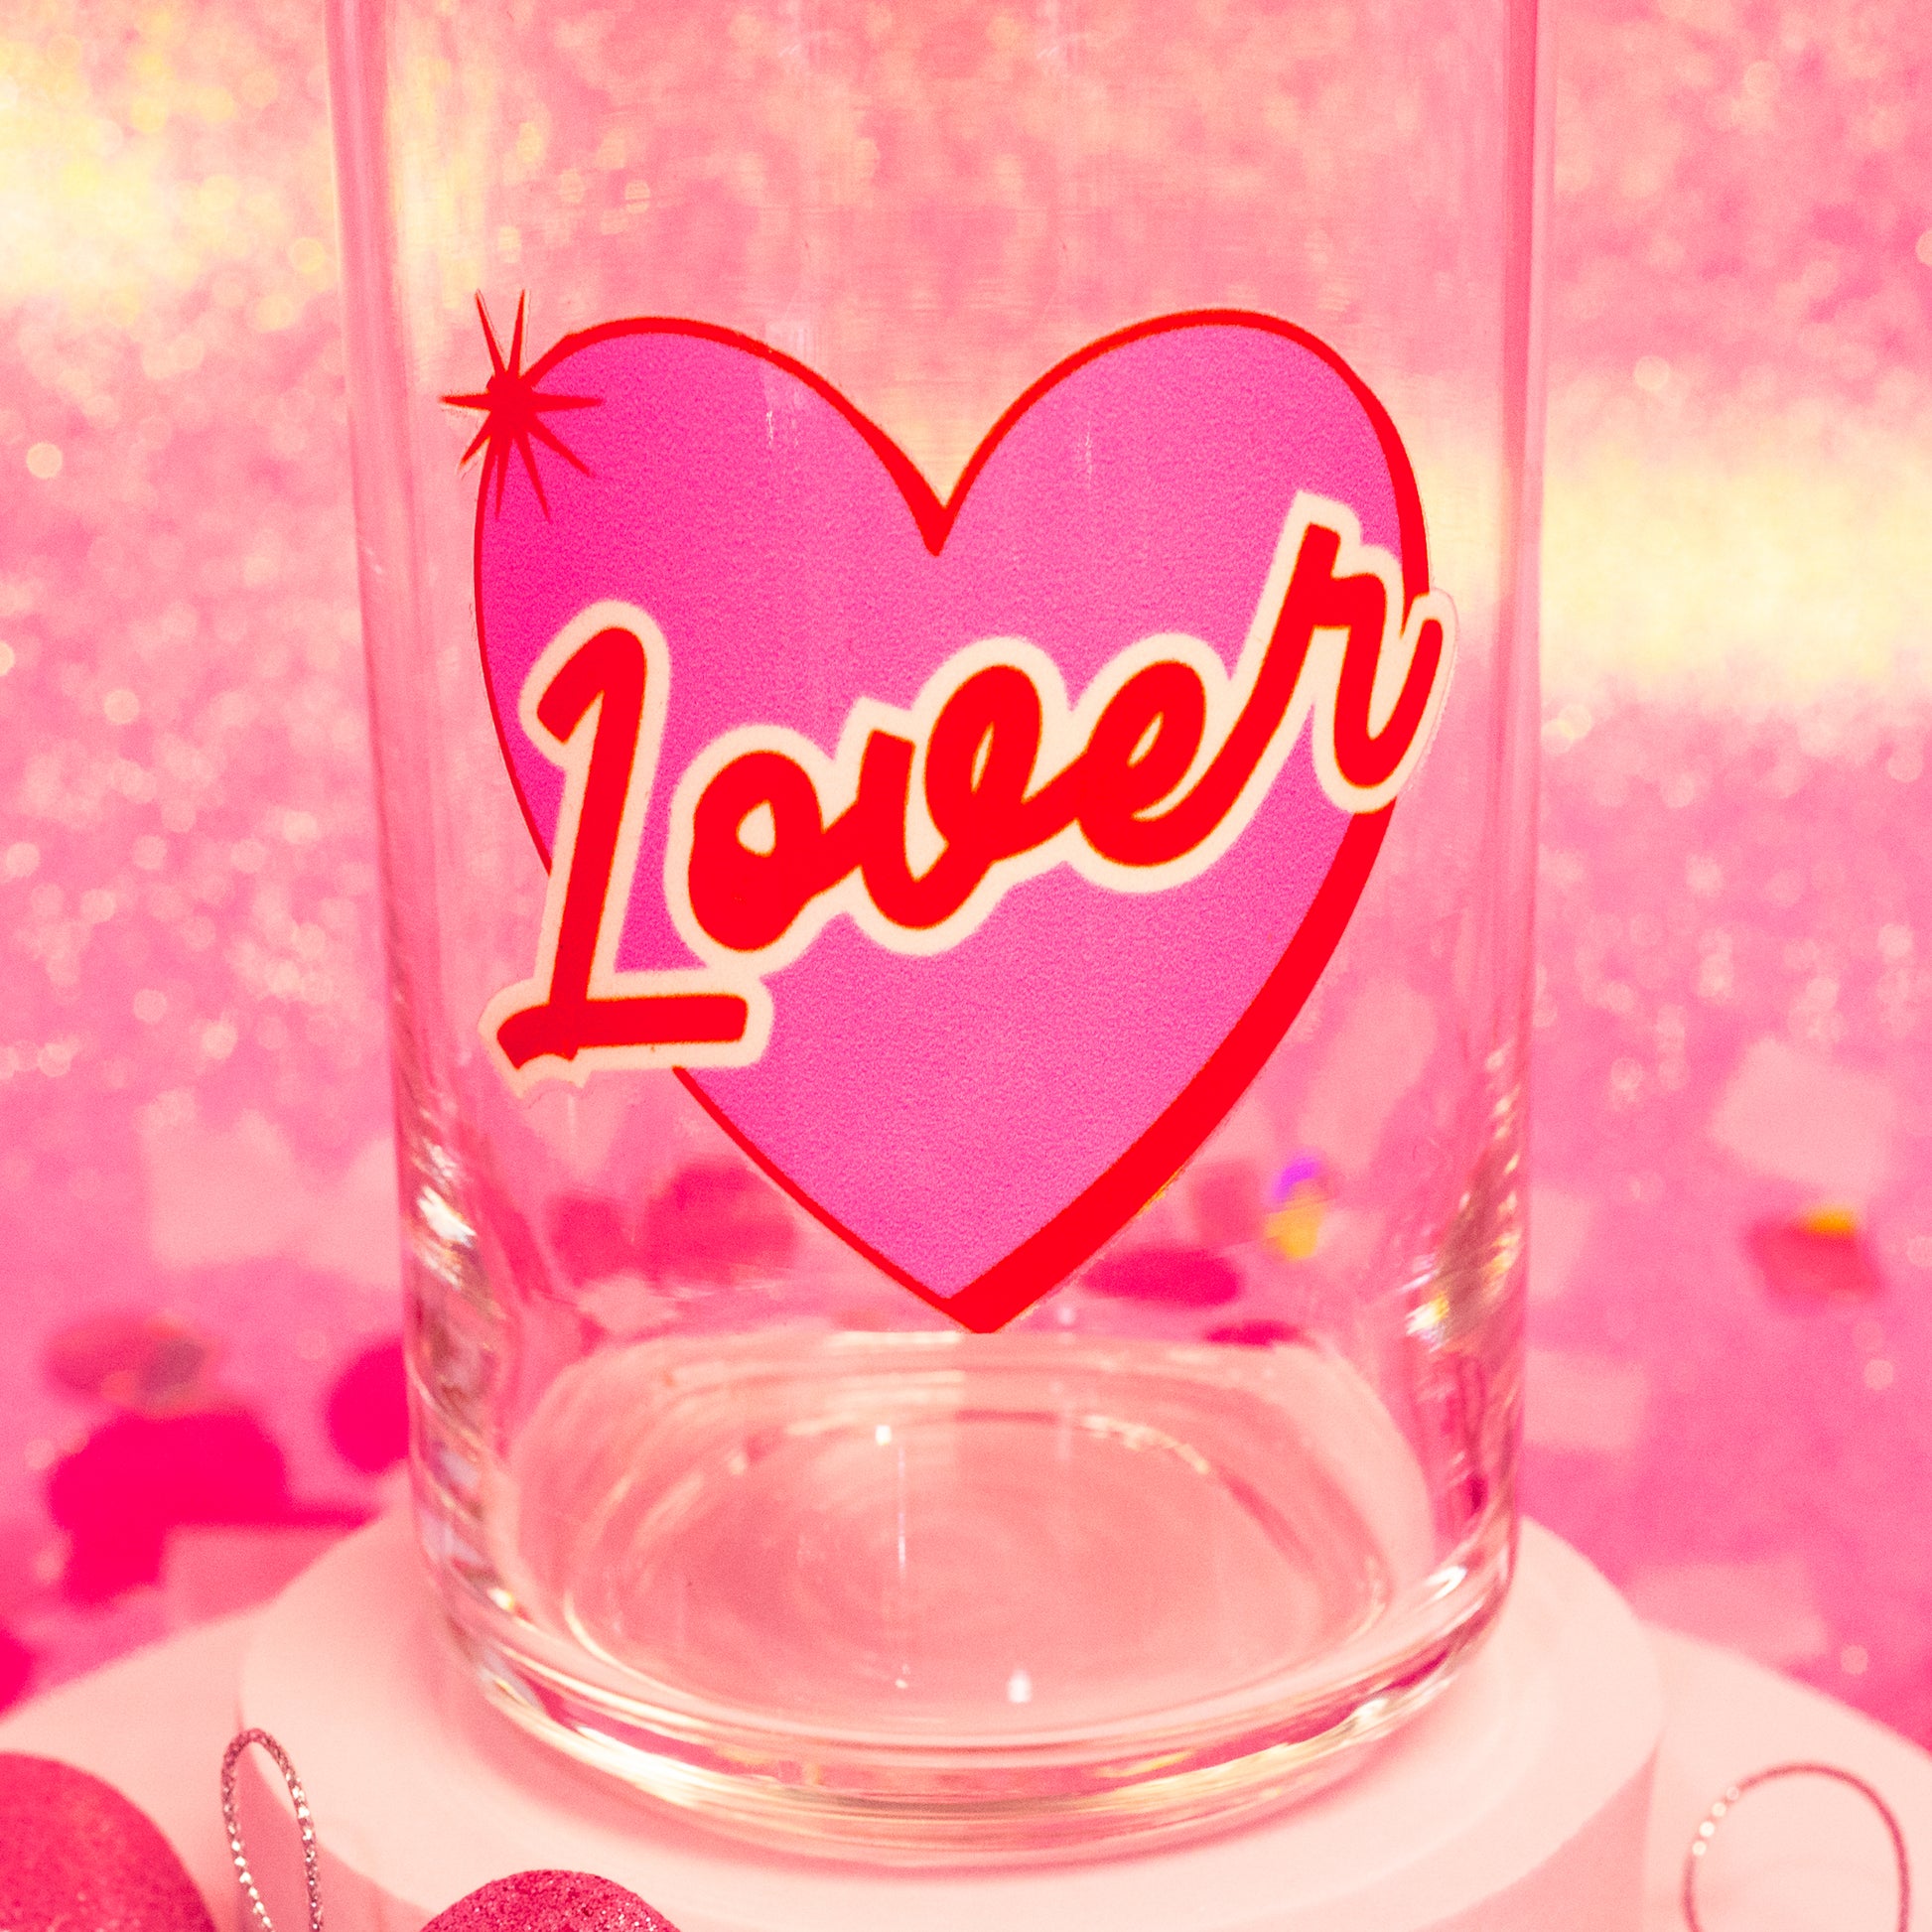 pink heart with orange words